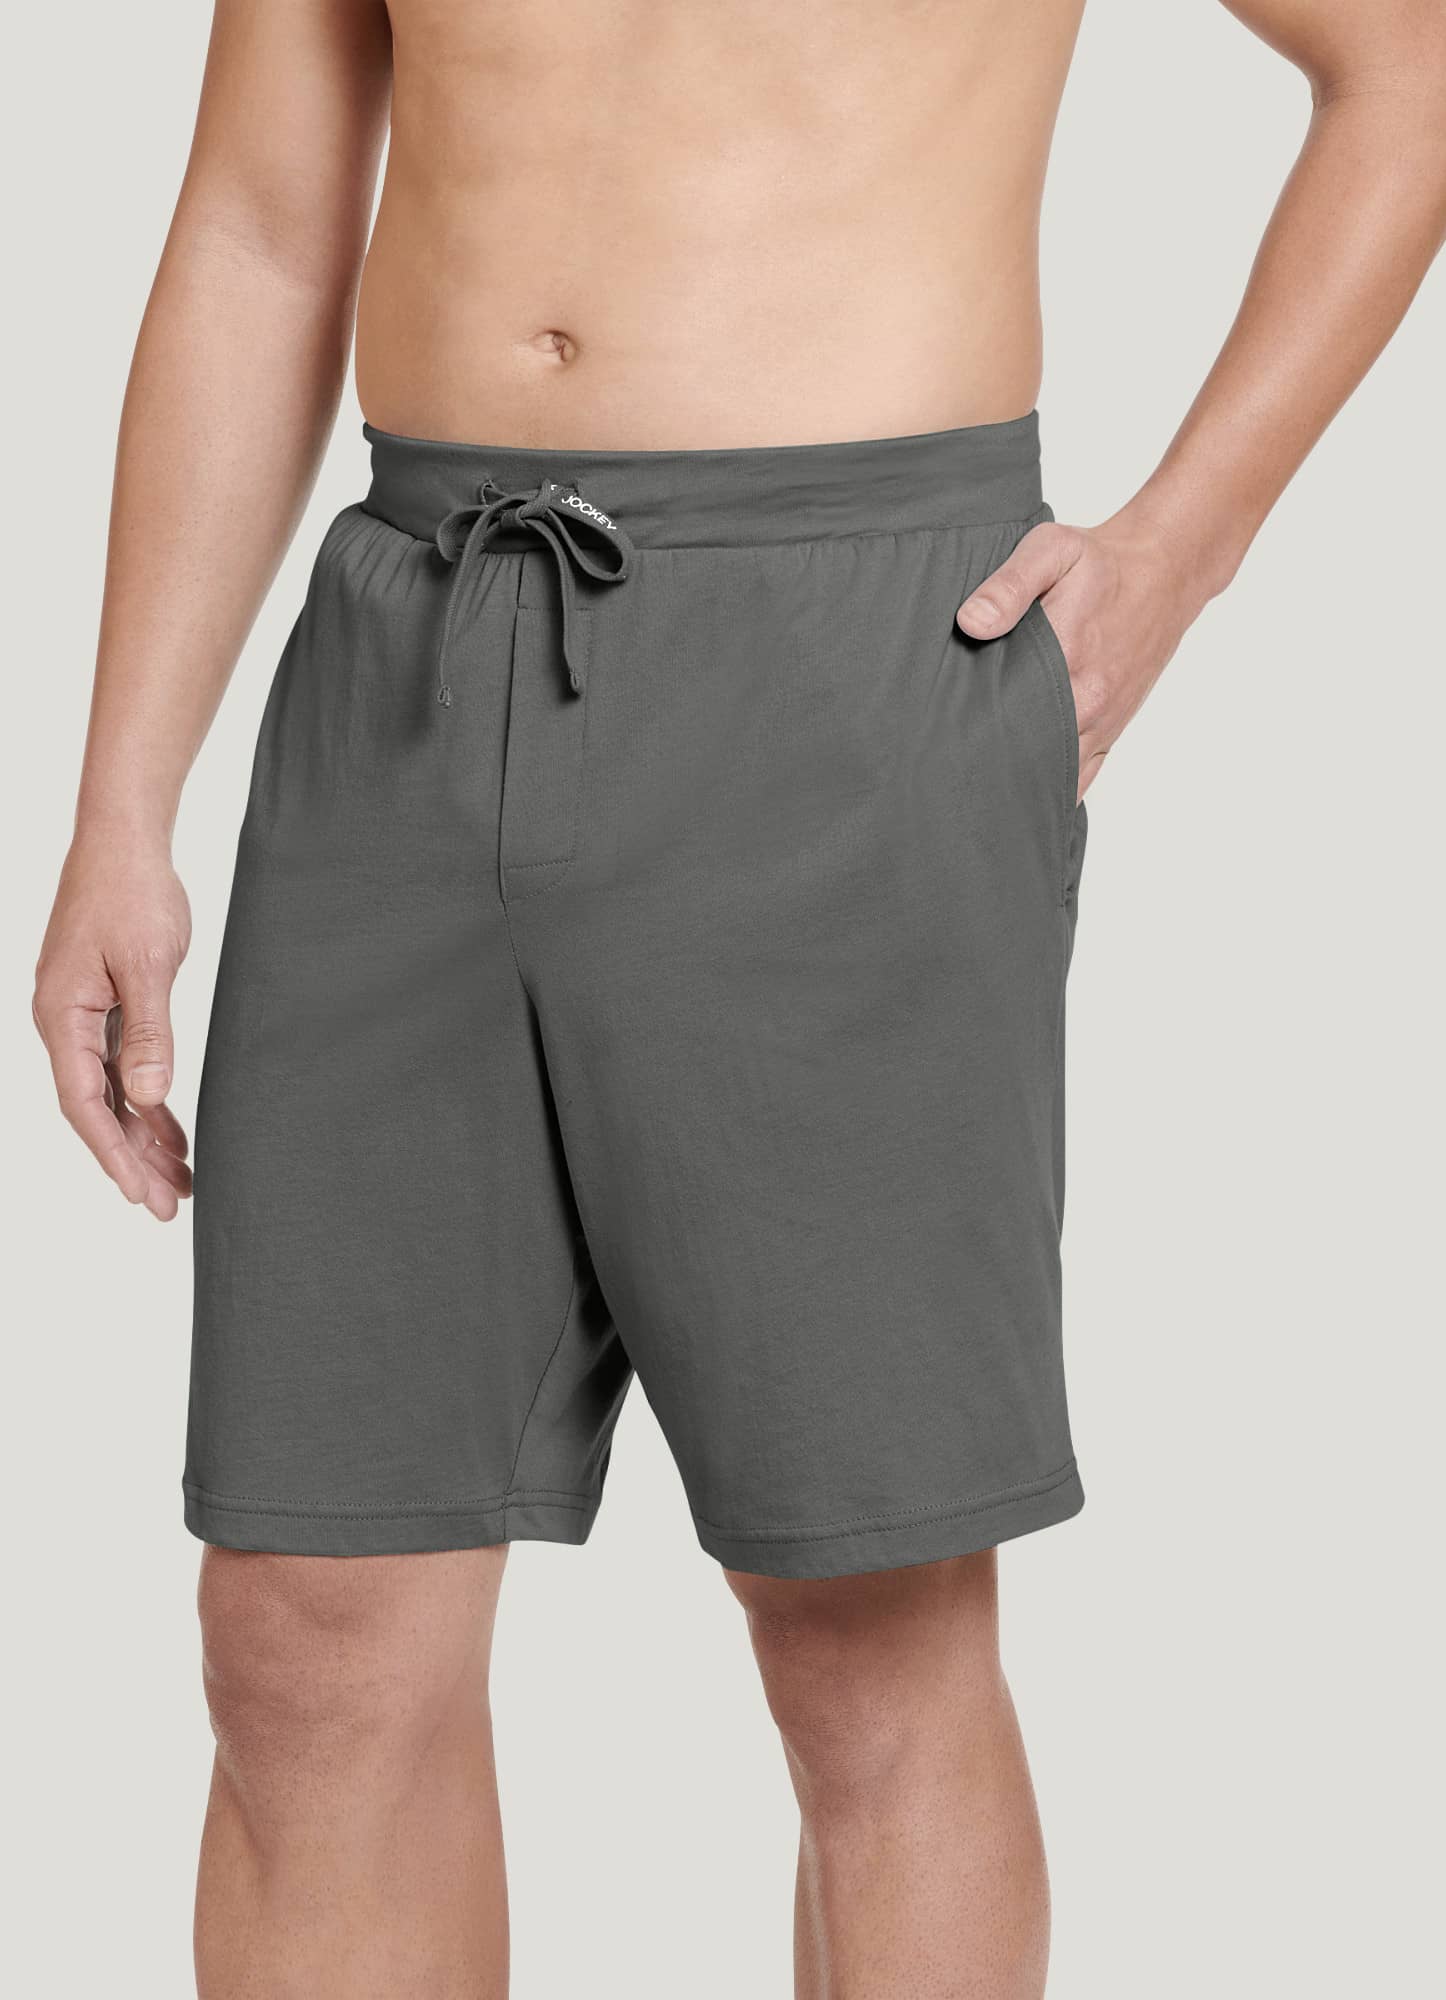 100% Cotton Underwear Male Sleep Bottoms Shorts Men Boxer - China